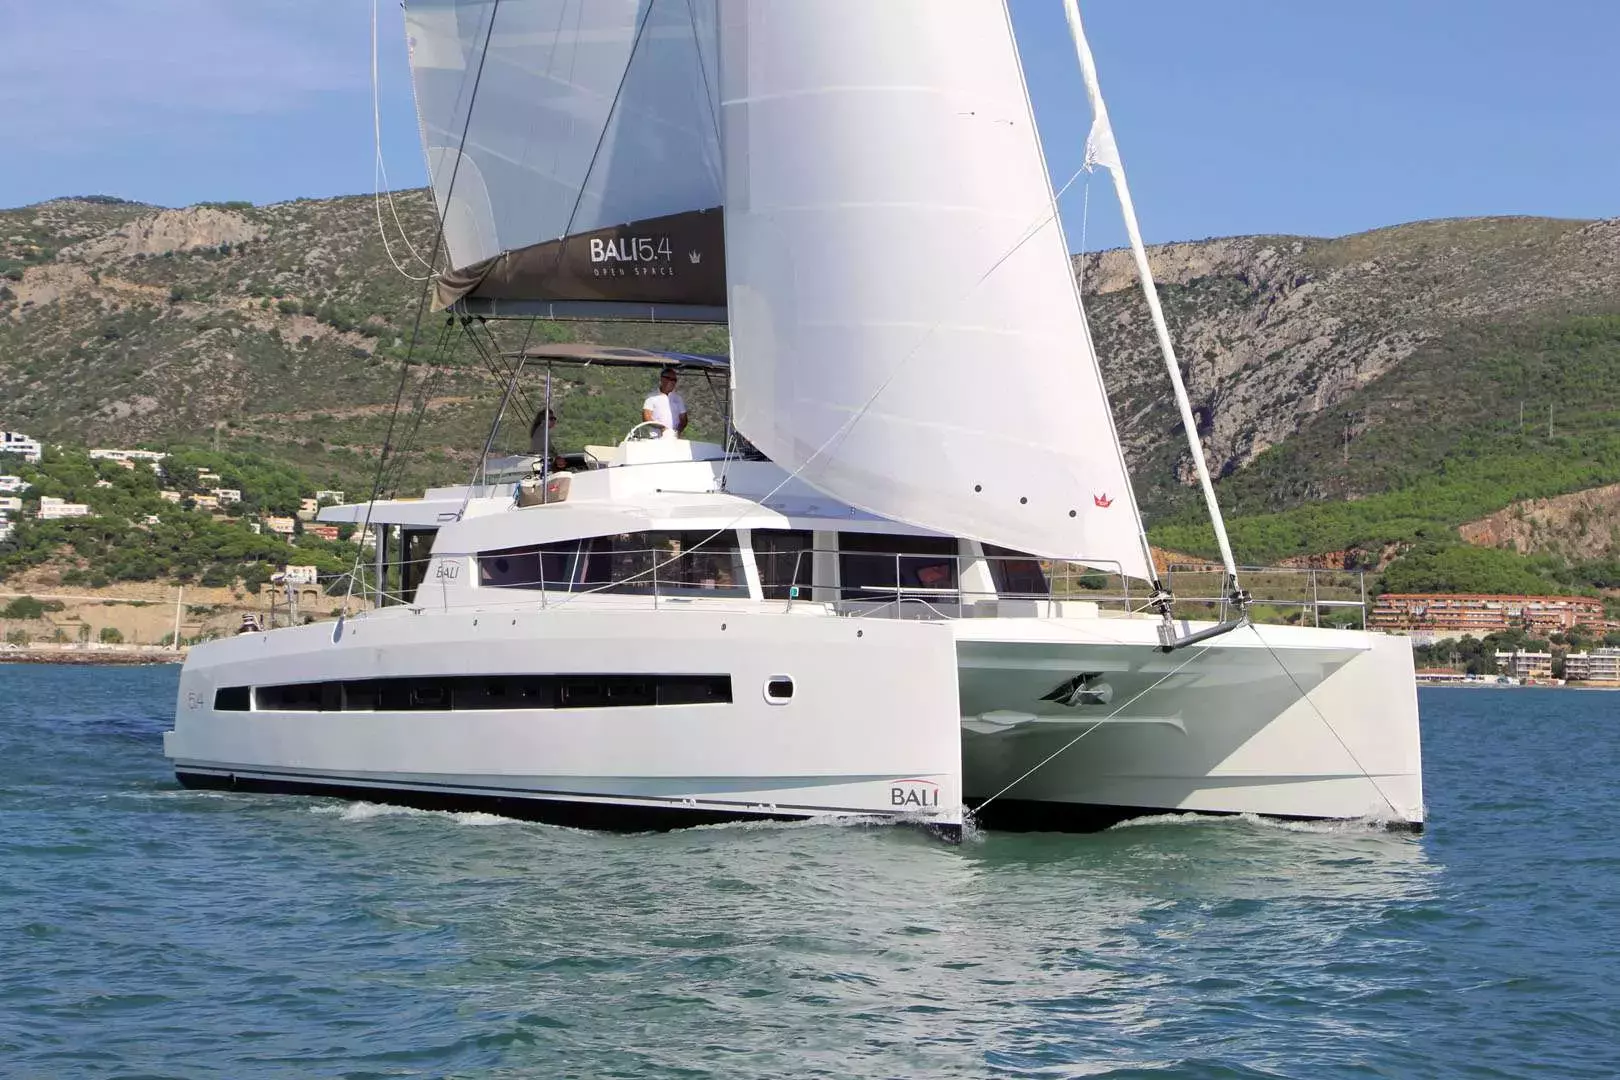 Mim Ocean One by Bali Catamarans - Top rates for a Rental of a private Sailing Catamaran in Barbados